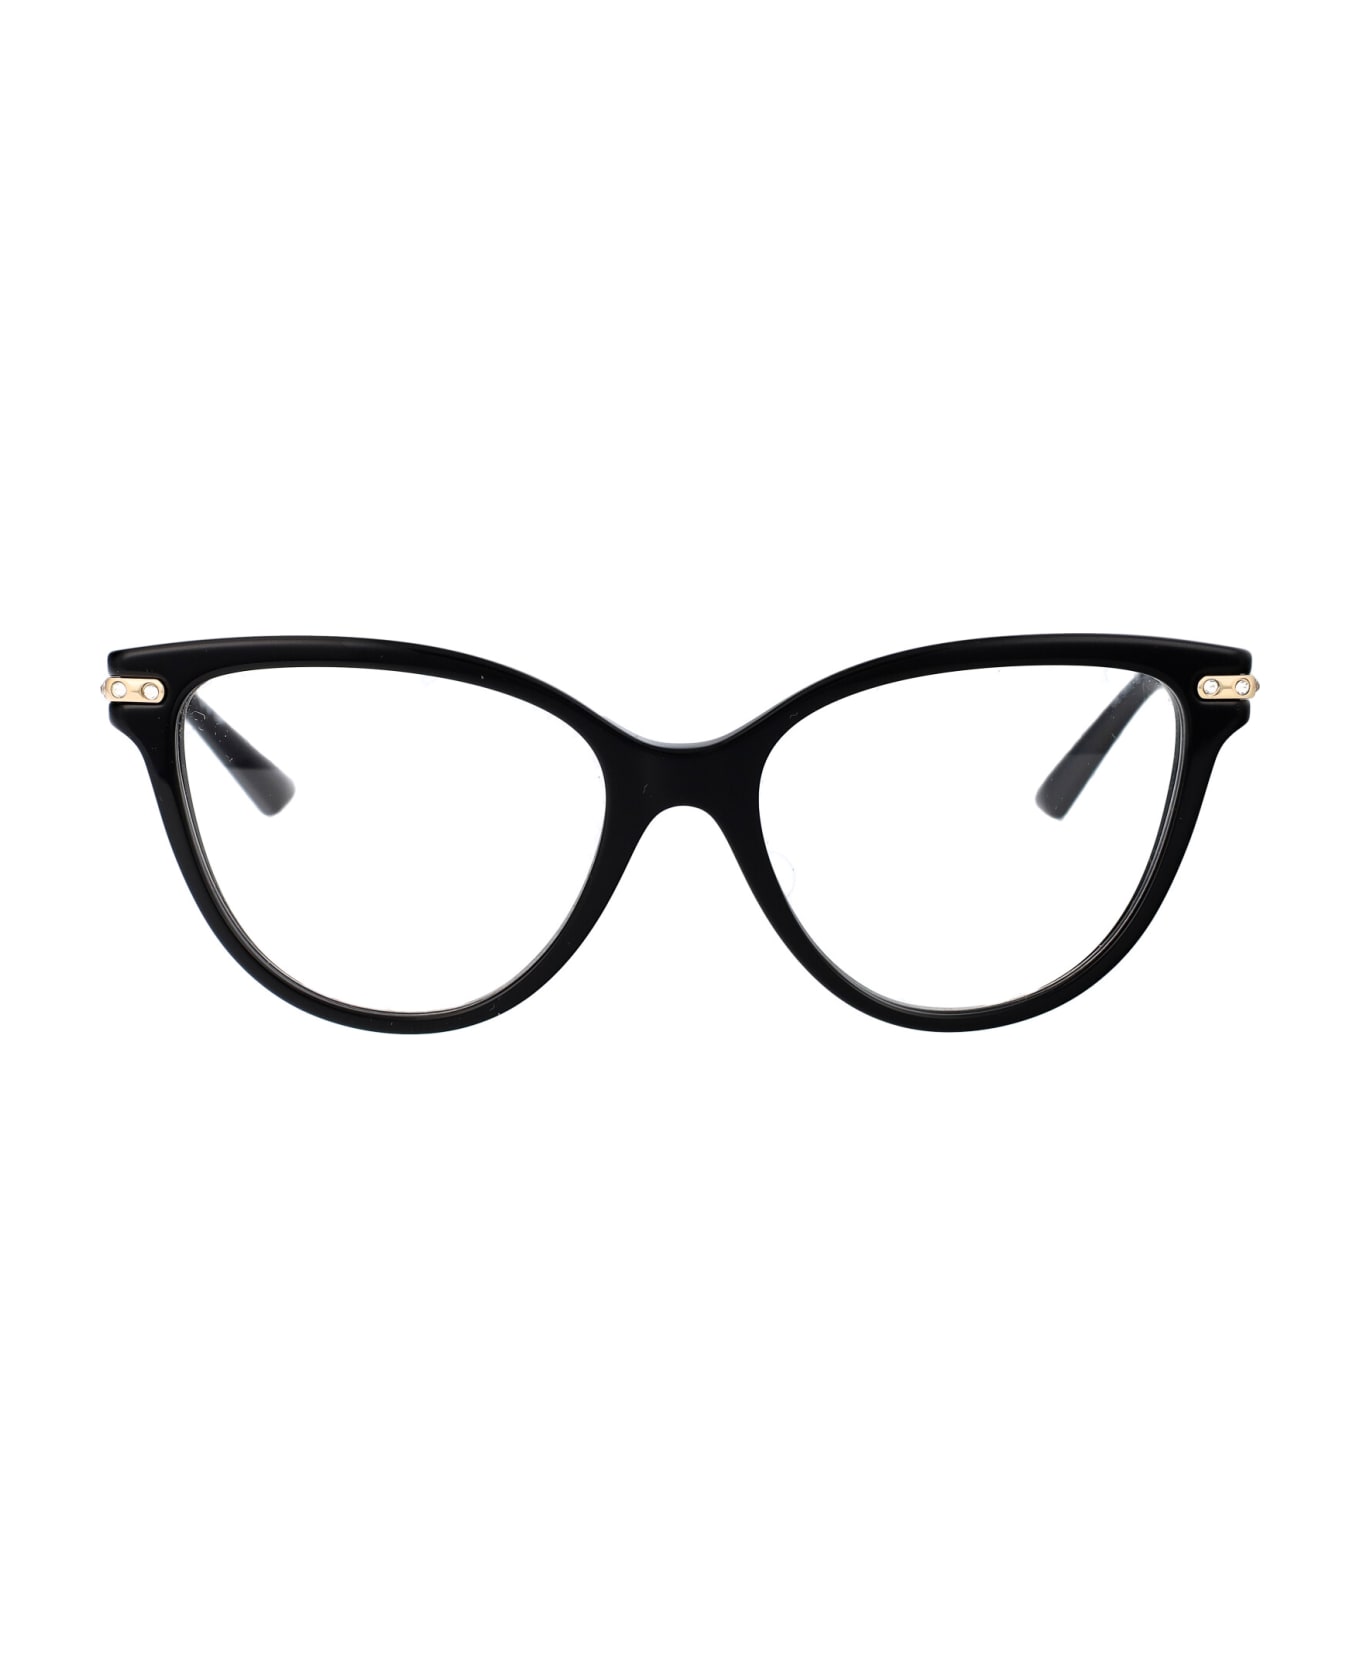 Jimmy Choo Eyewear 0jc4005hb Sunglasses - 300687 Pale Gold